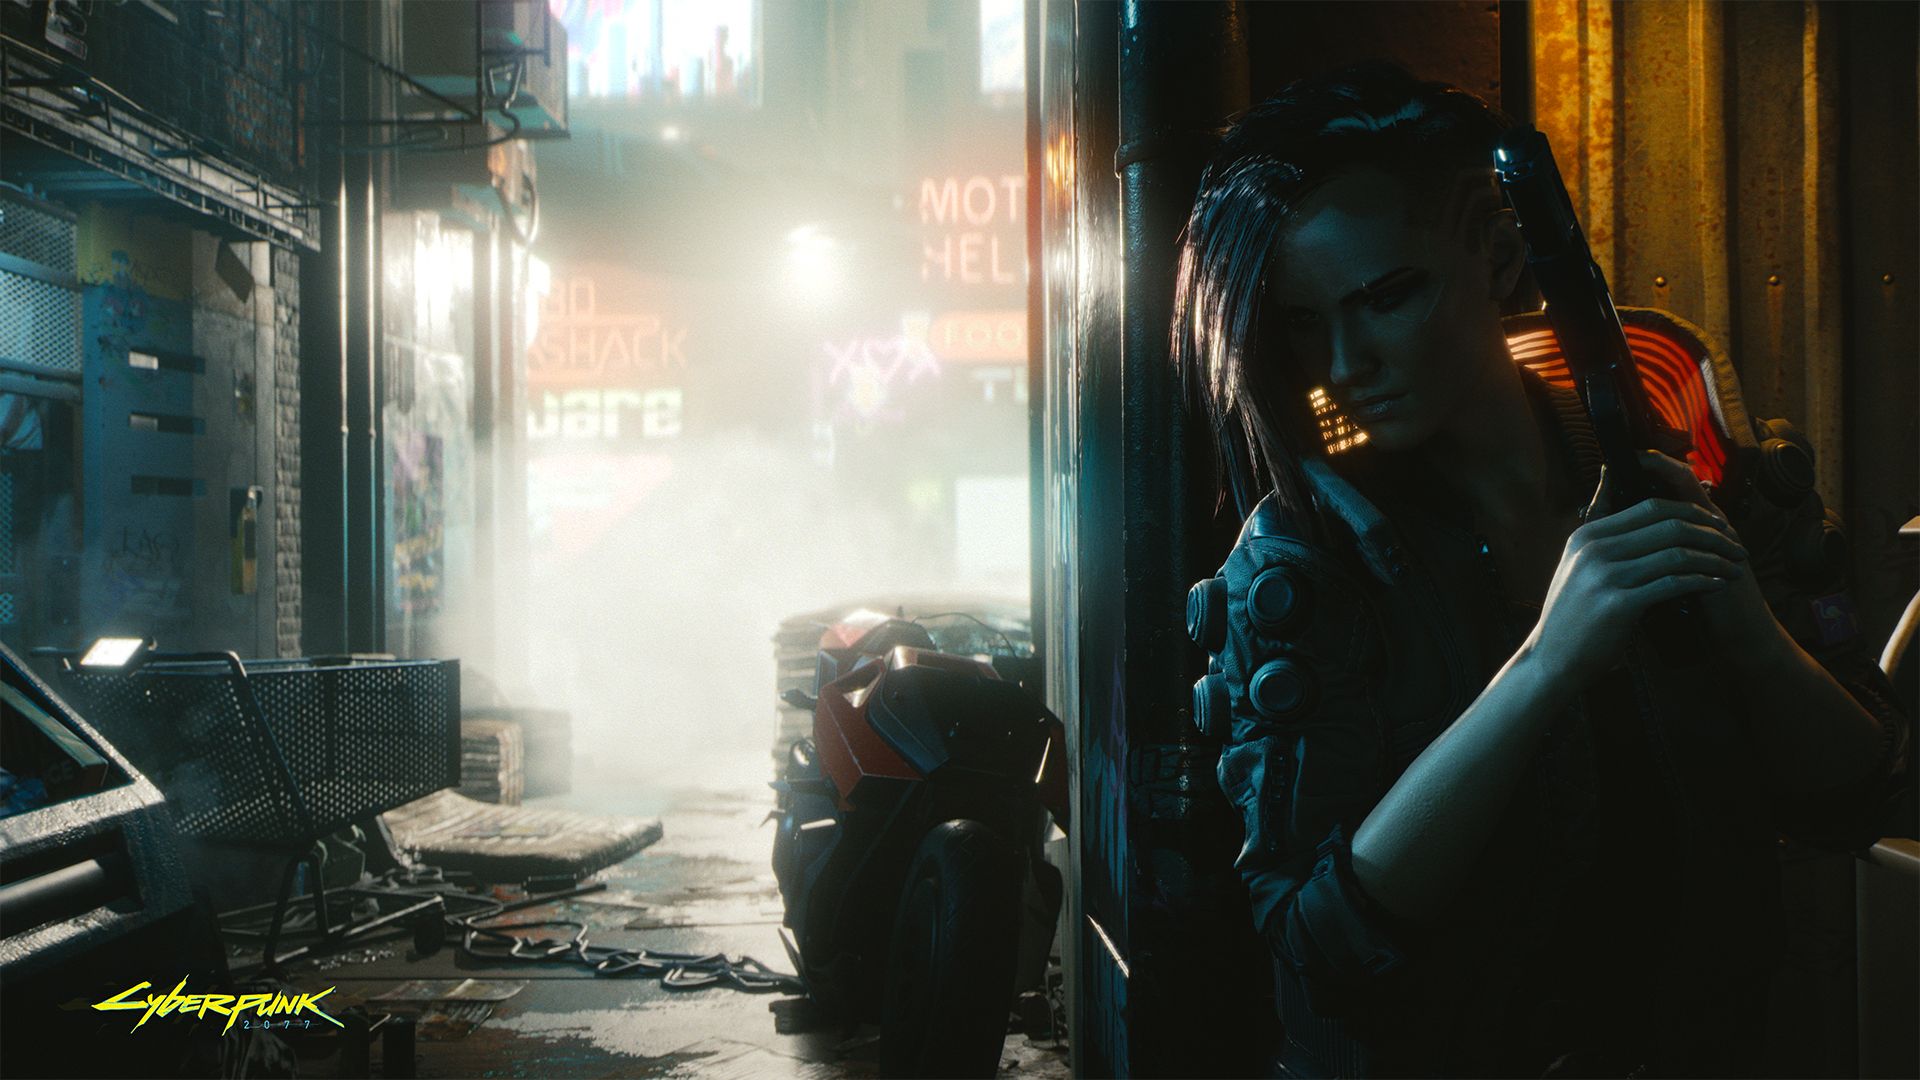 Cyberpunk 2077 V hiding round a corner of an alley, gun drawn